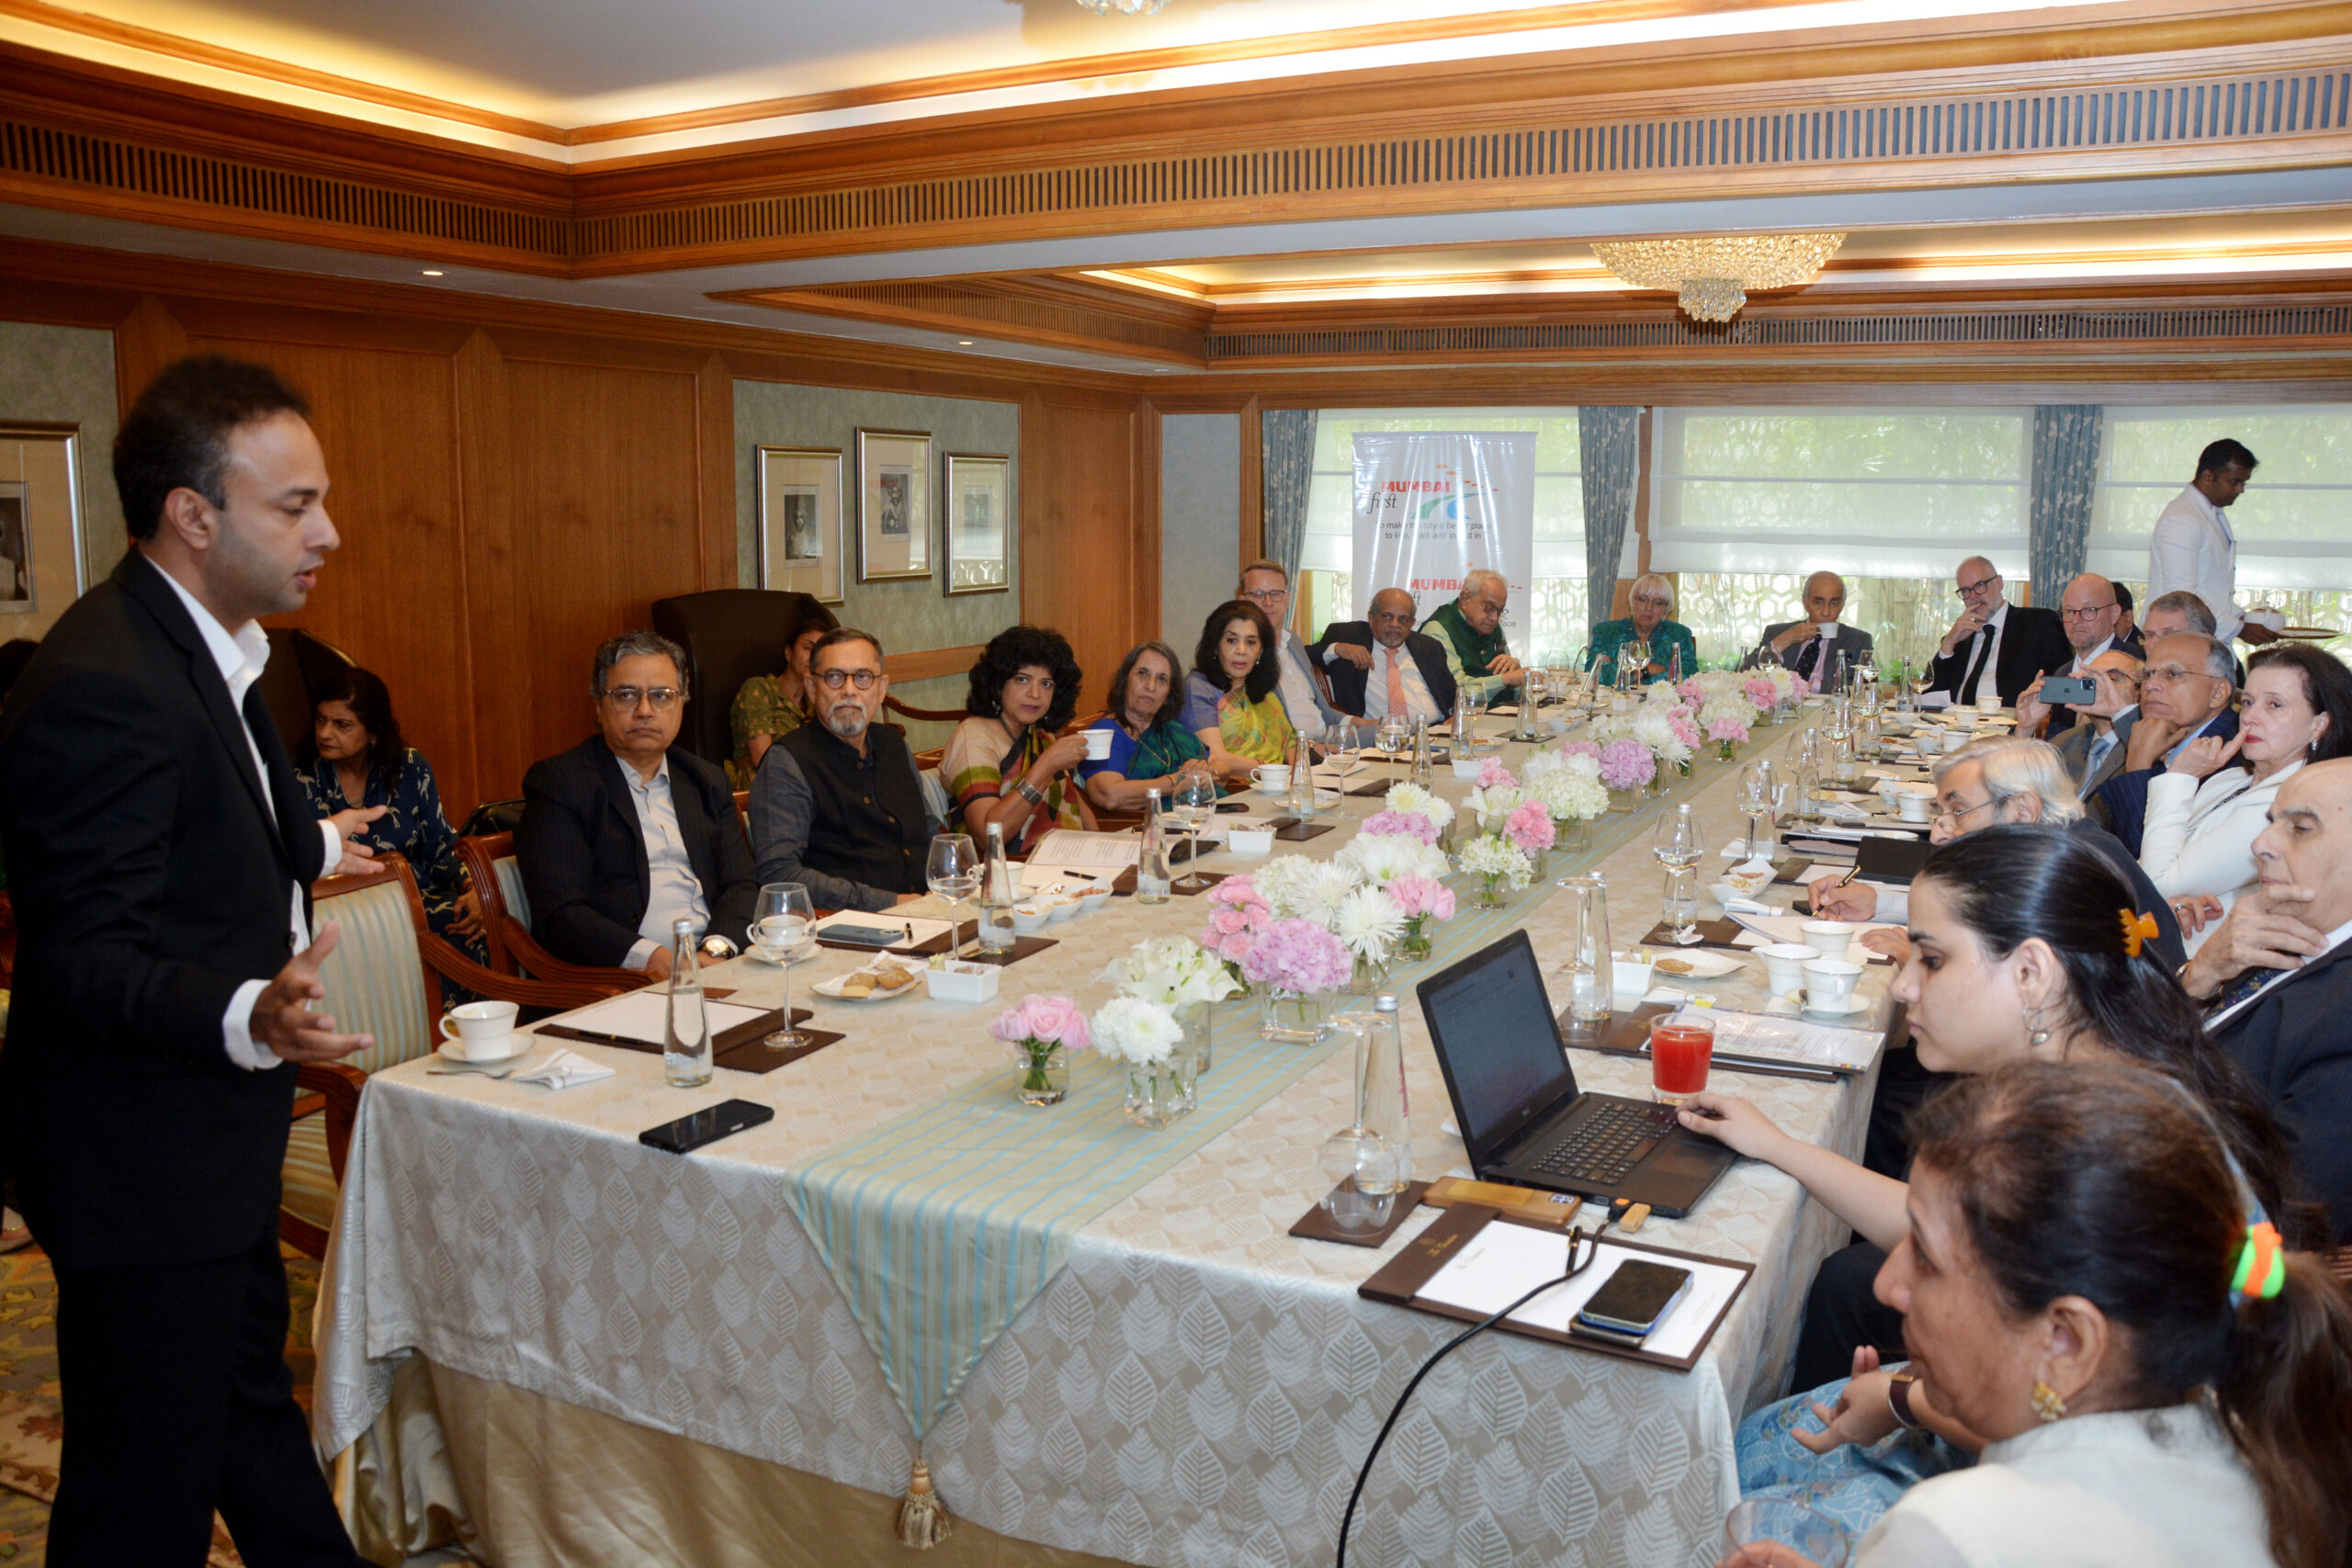 Roxy Mathew Koll at the Mumbai First roundtable meeting with the German Minister of Culture and Media, Claudia Roth, at the Taj Mahal Palace Hotel, Mumbai